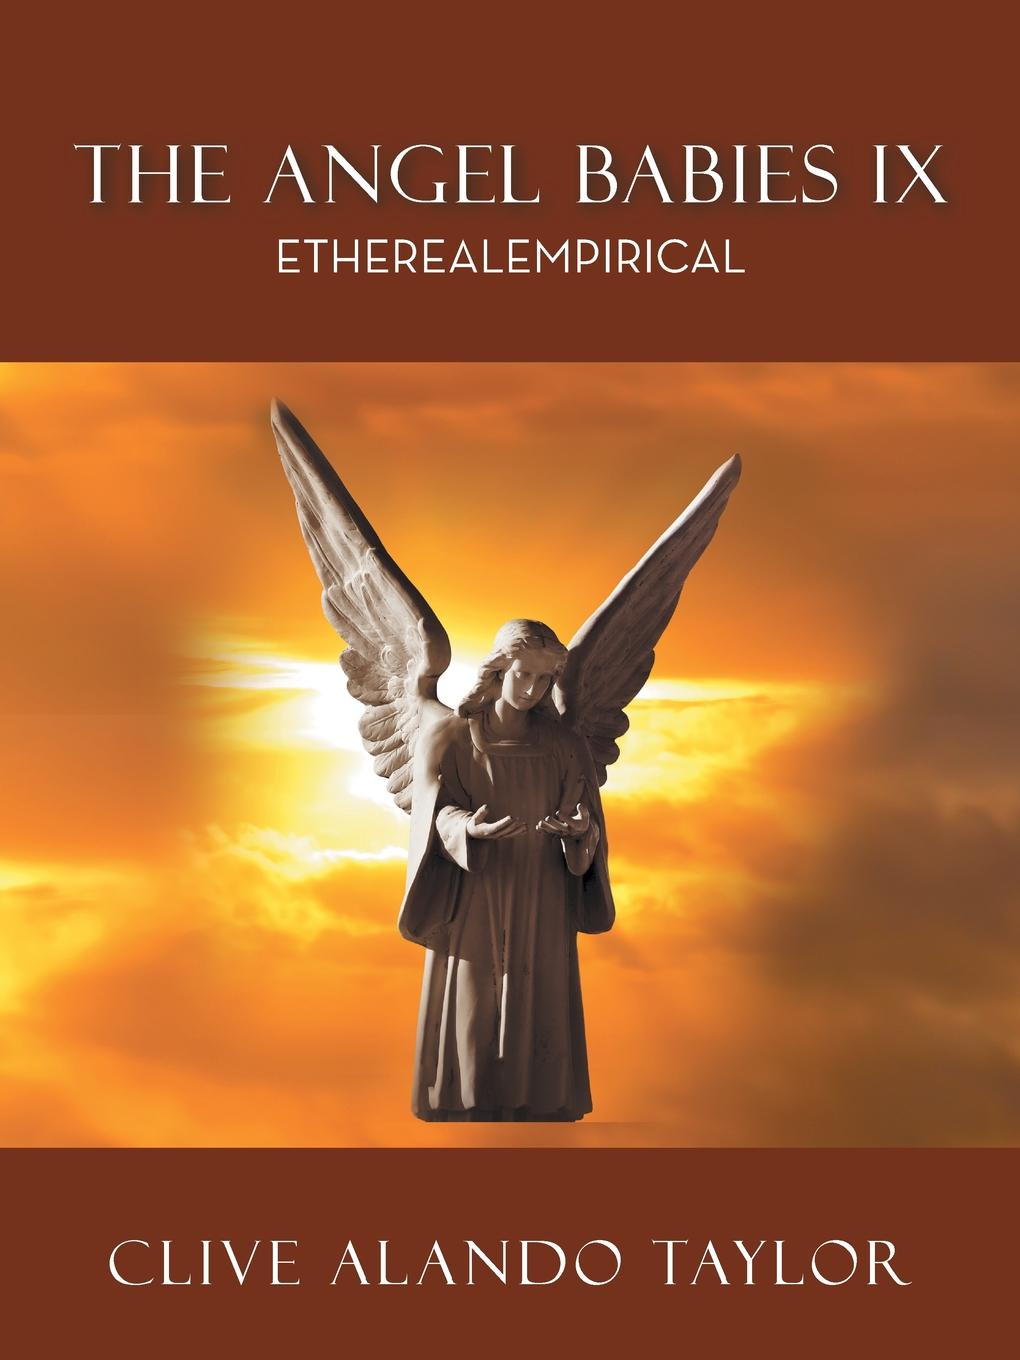 The Angel Babies IX. ETHEREALEMPIRICAL